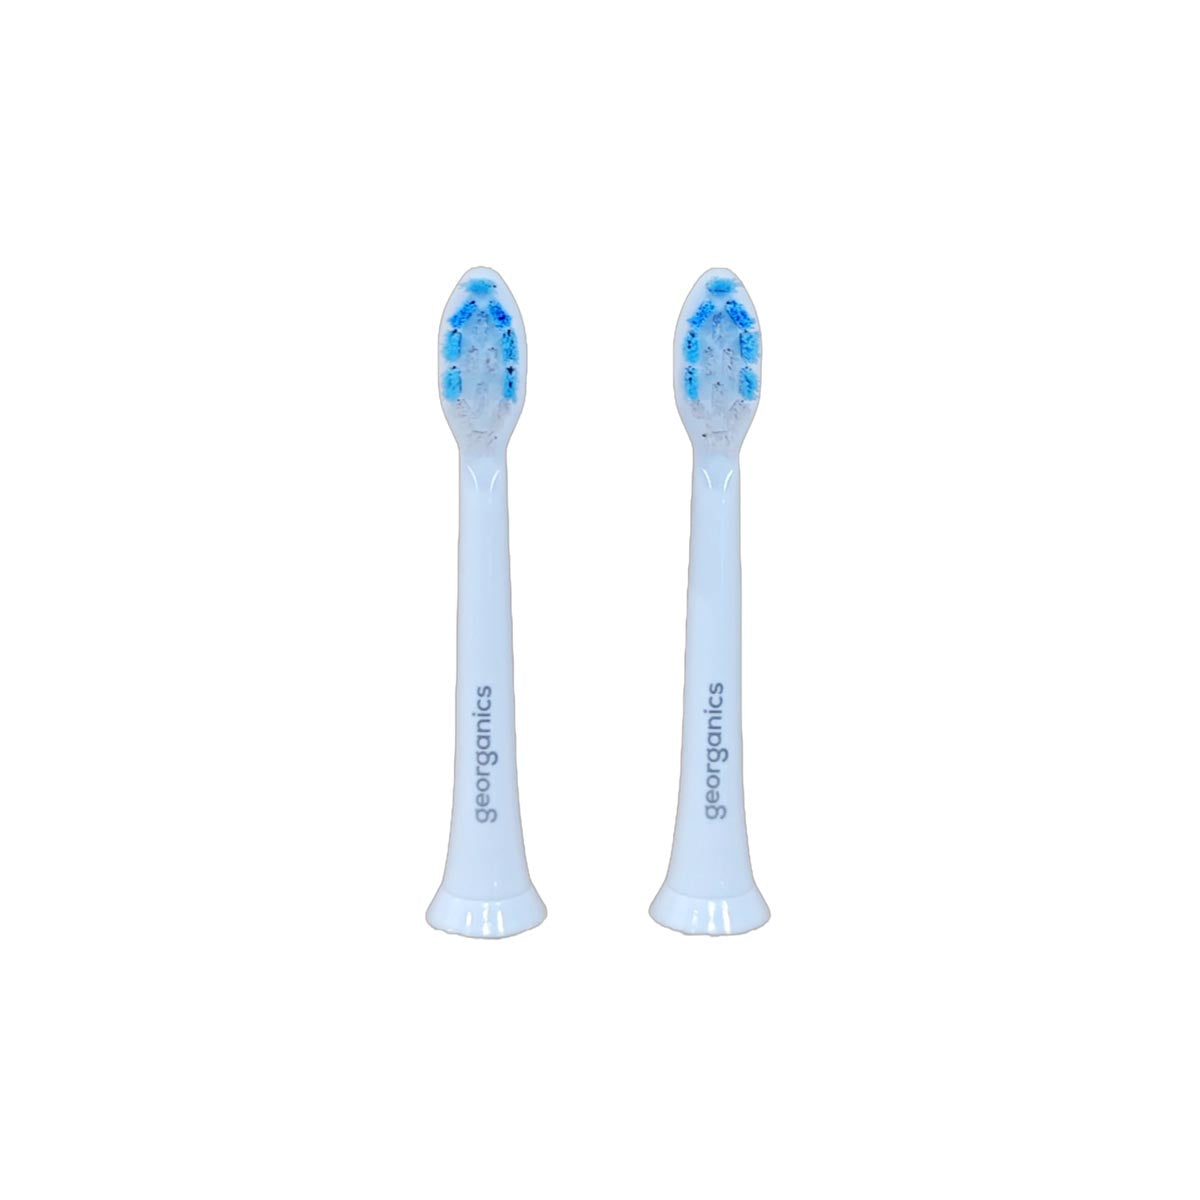 Sonic Toothbrush Heads – Medium Bristles 50000